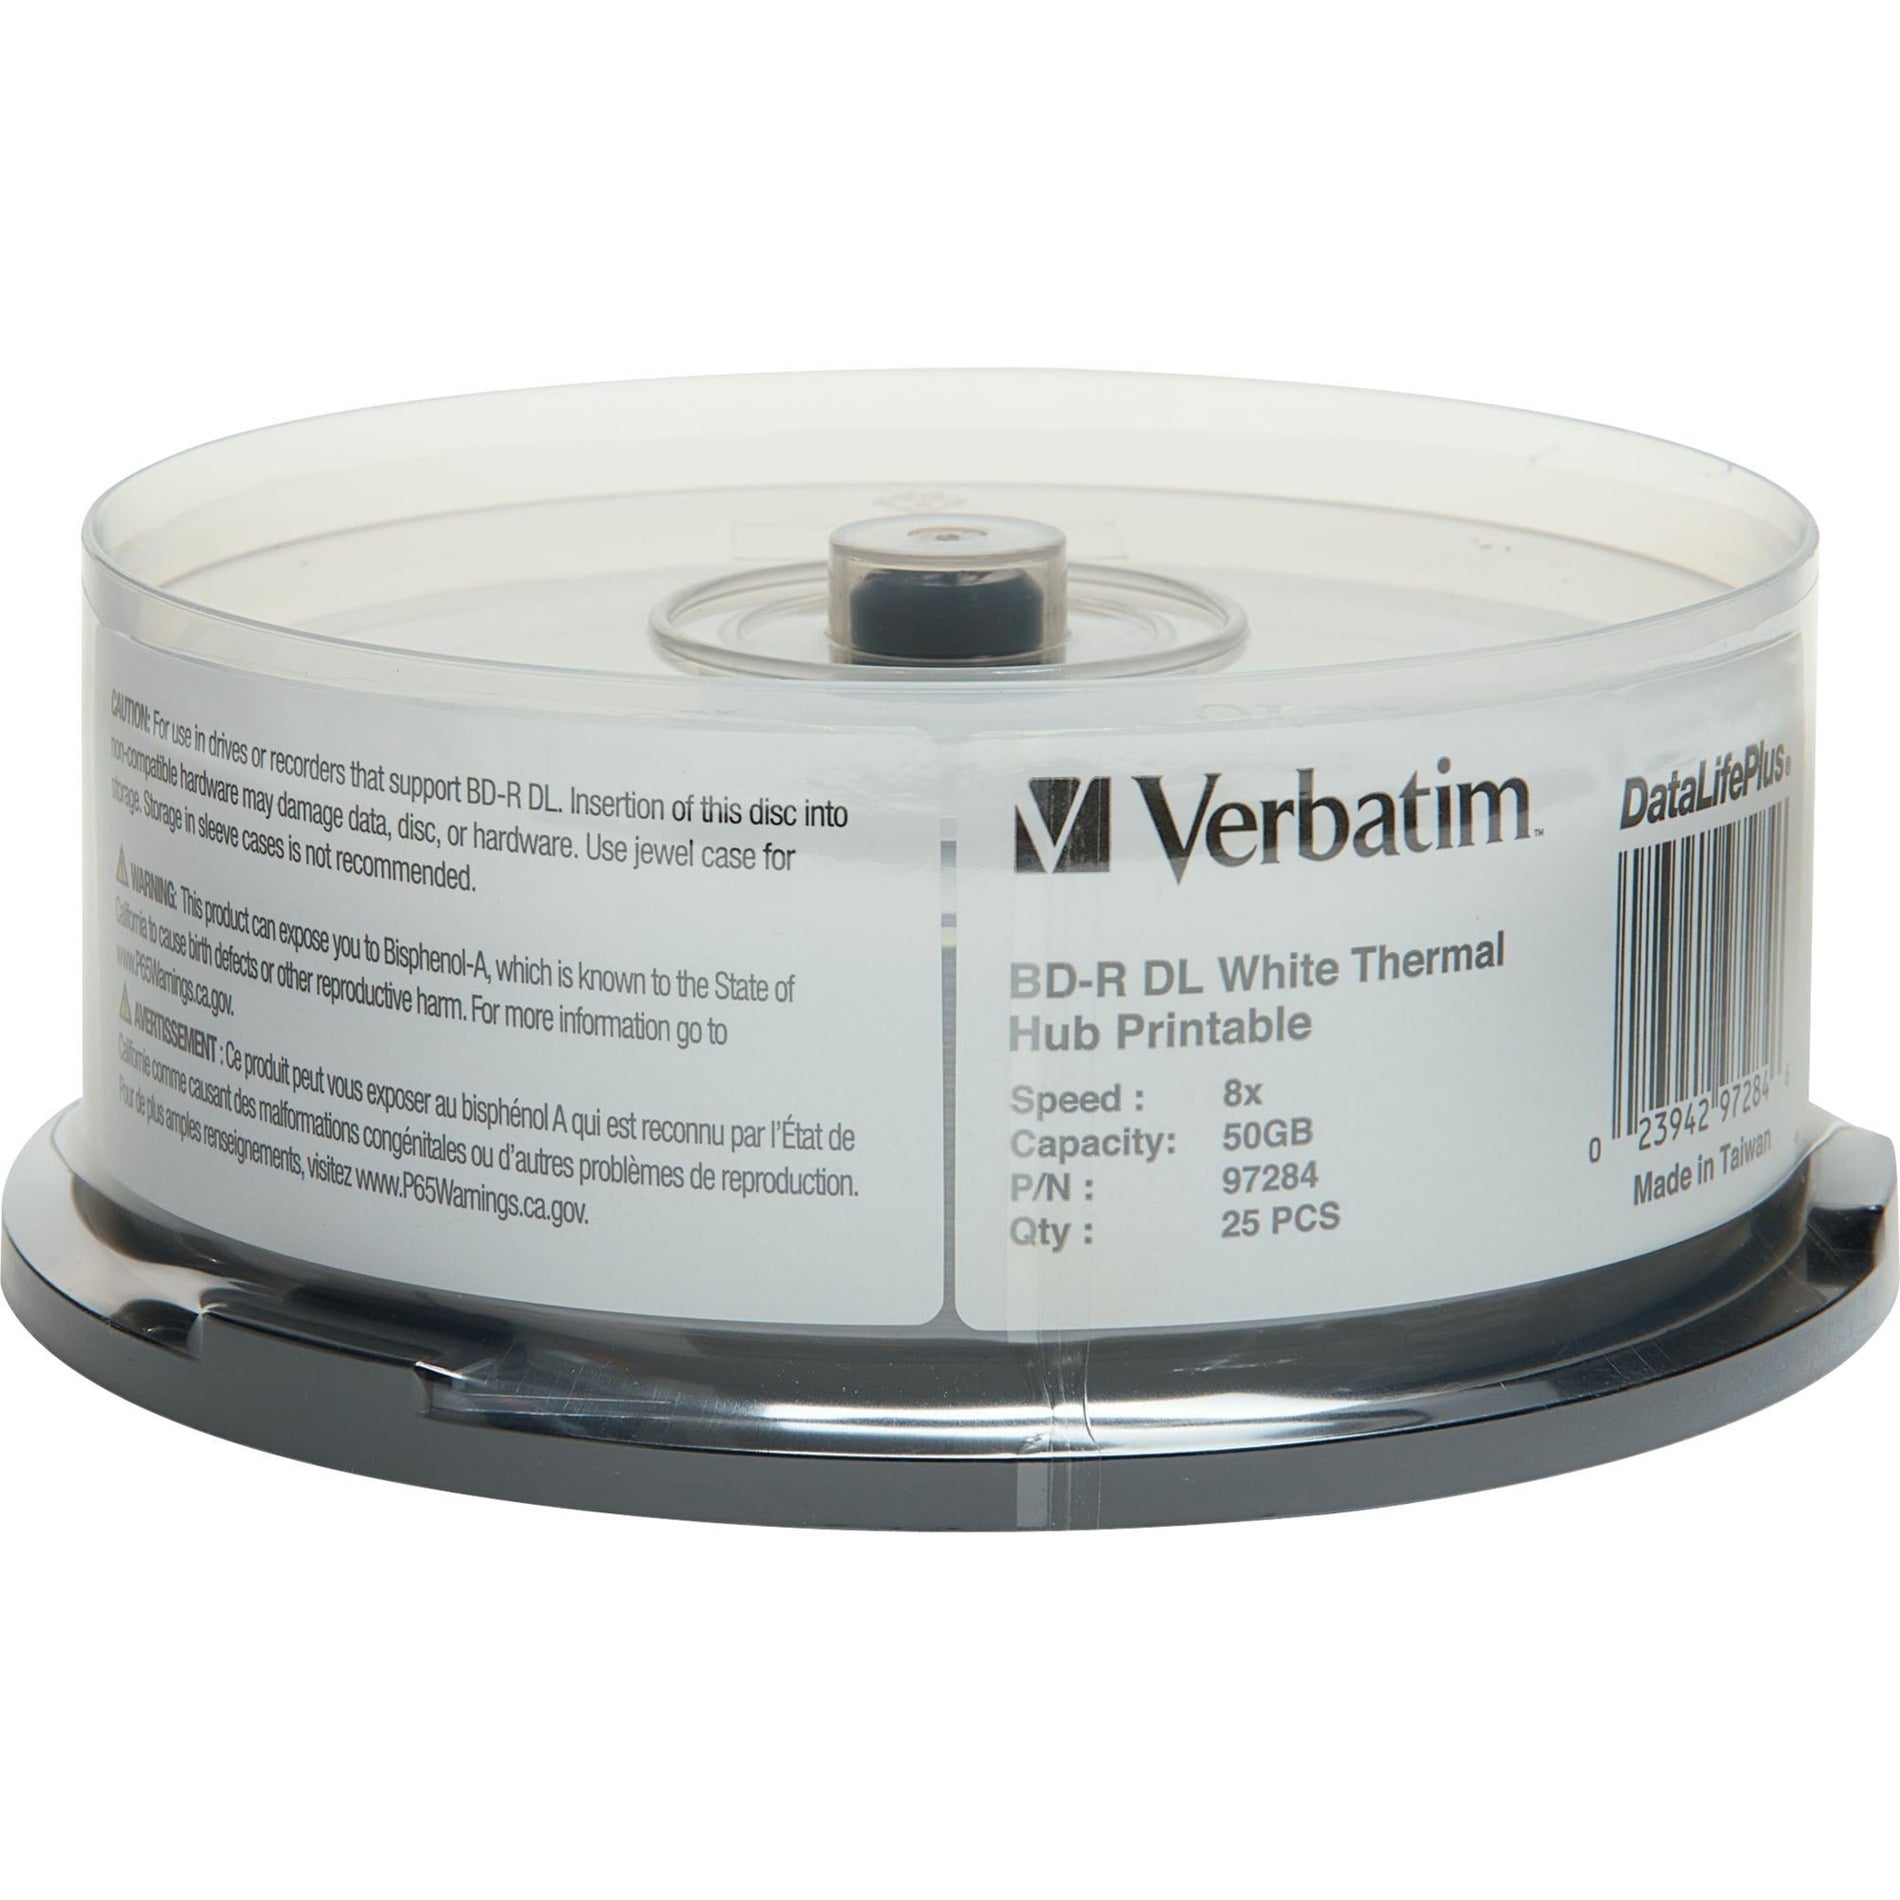 Verbatim 97284 BD-R DL 50GB 8X, DataLifePlus, White Thermal Hub Printable